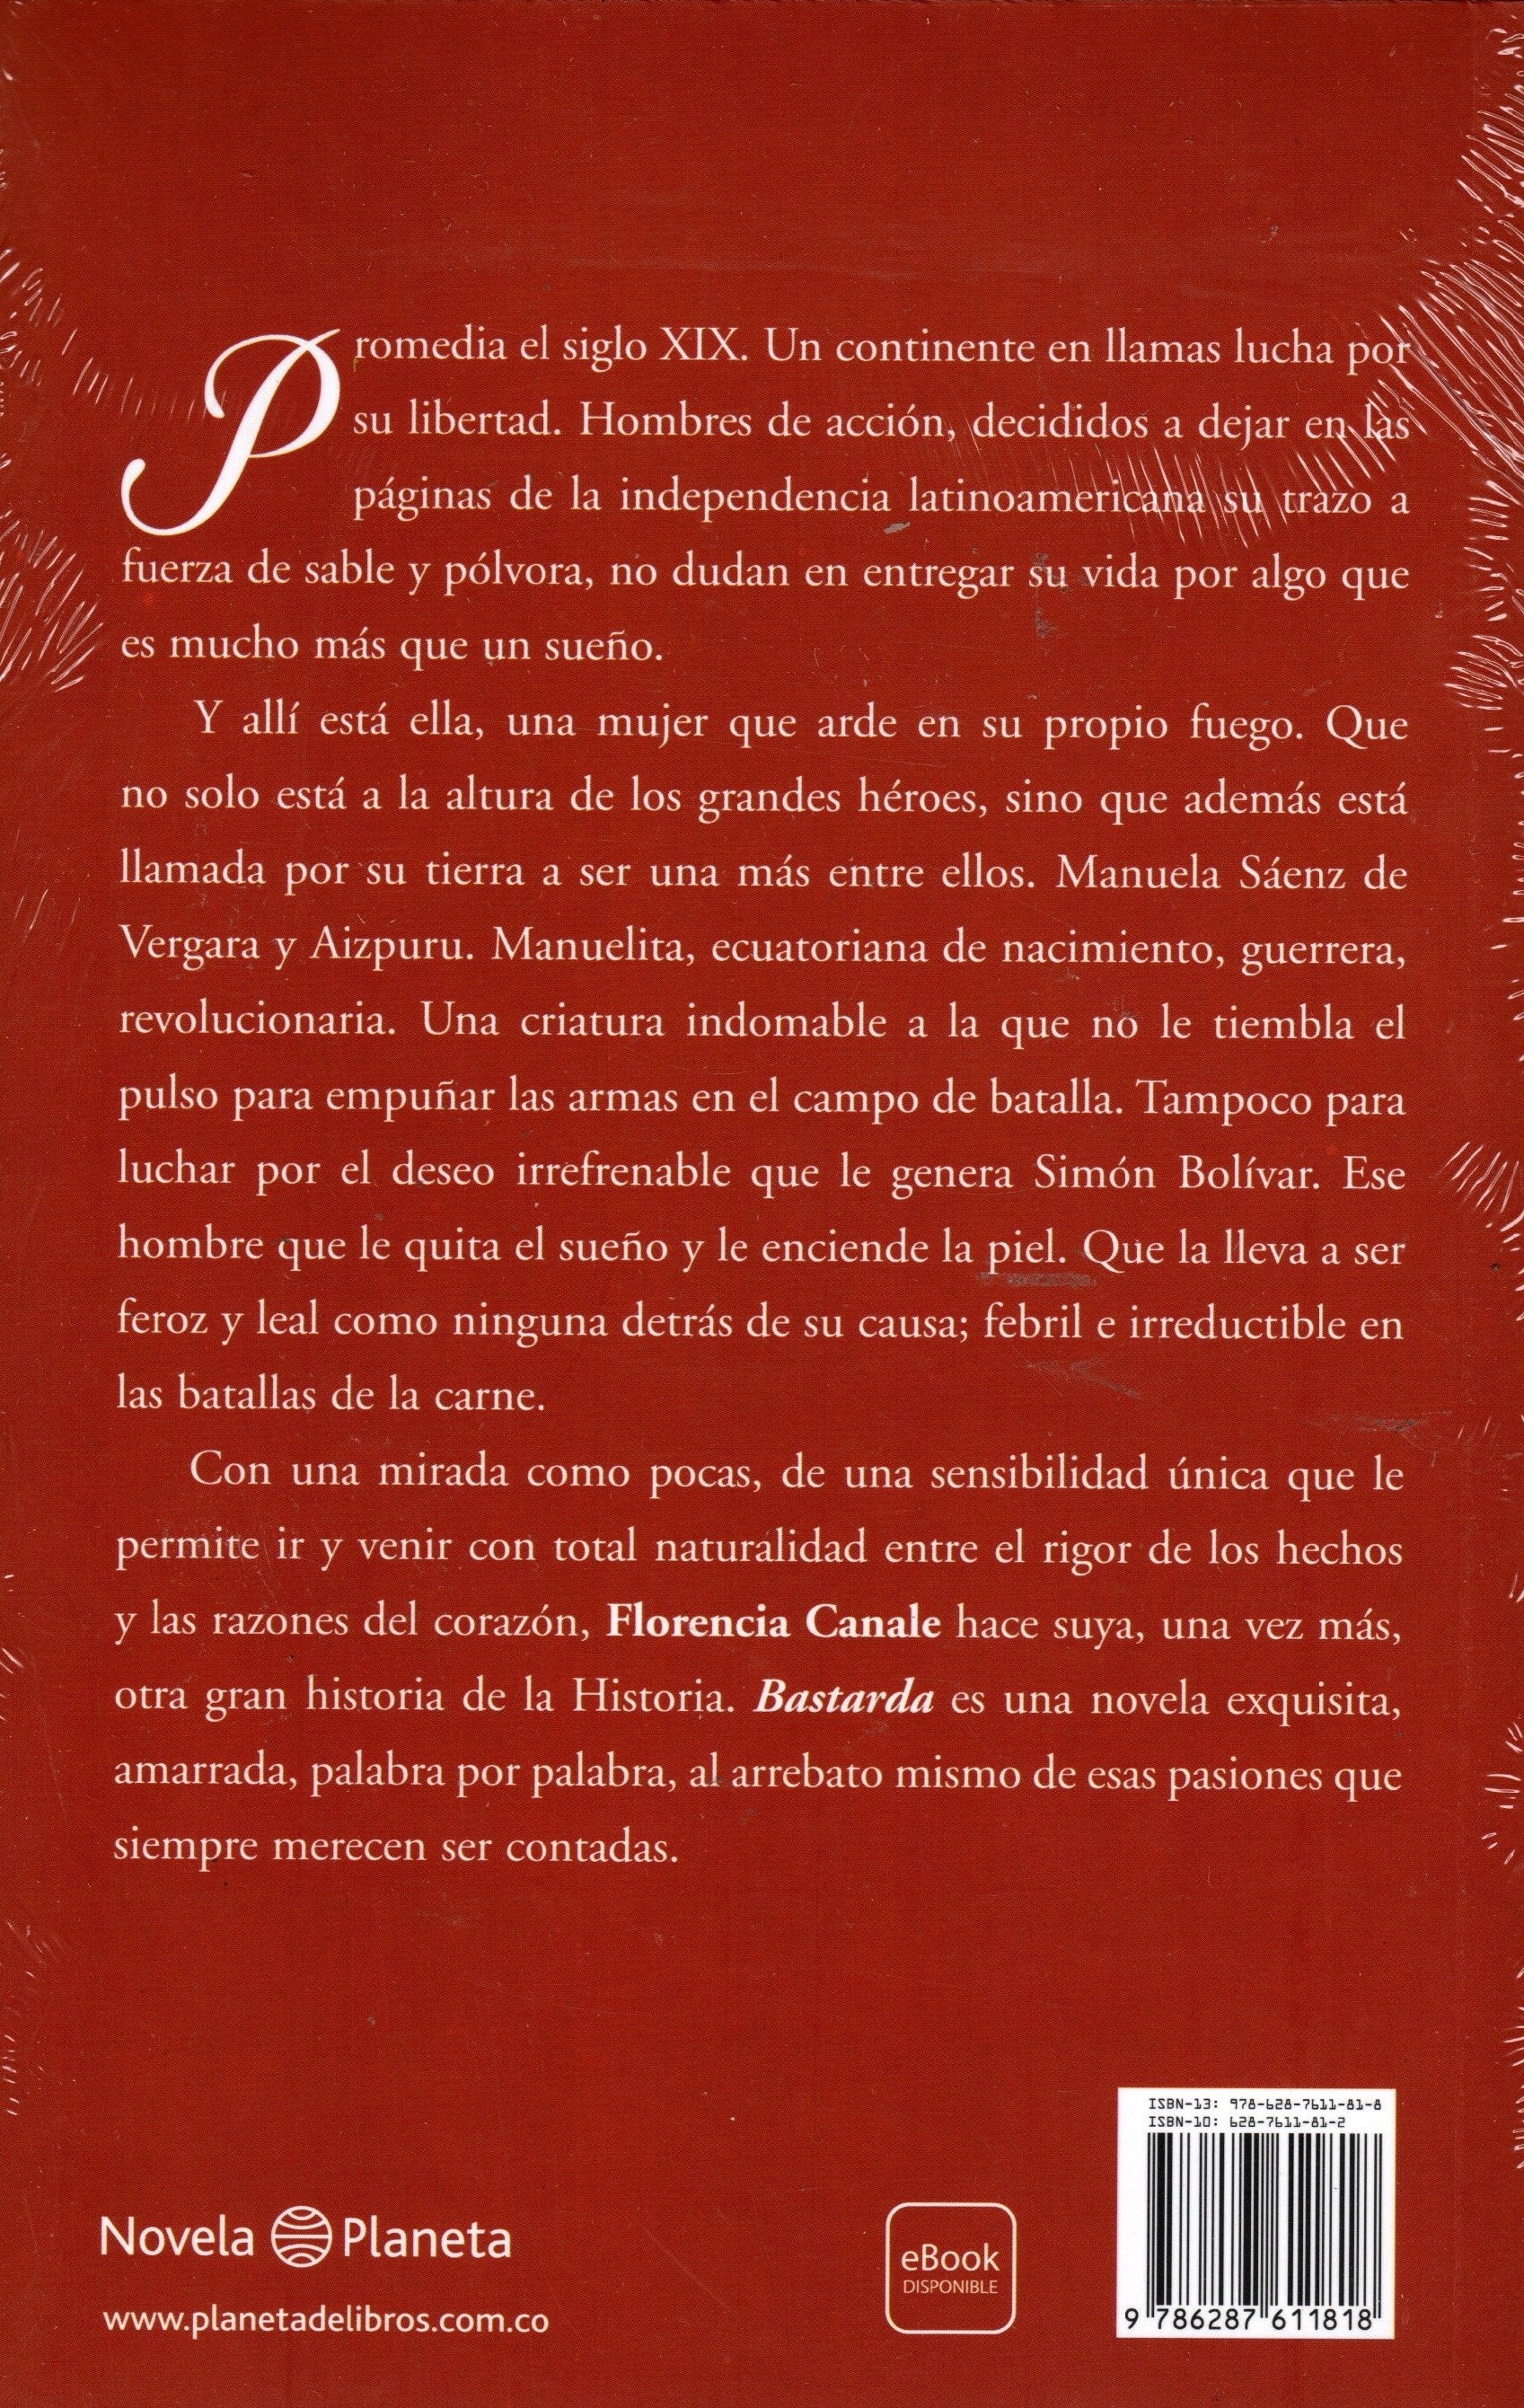 Libro Florencia Canale - Bastarda